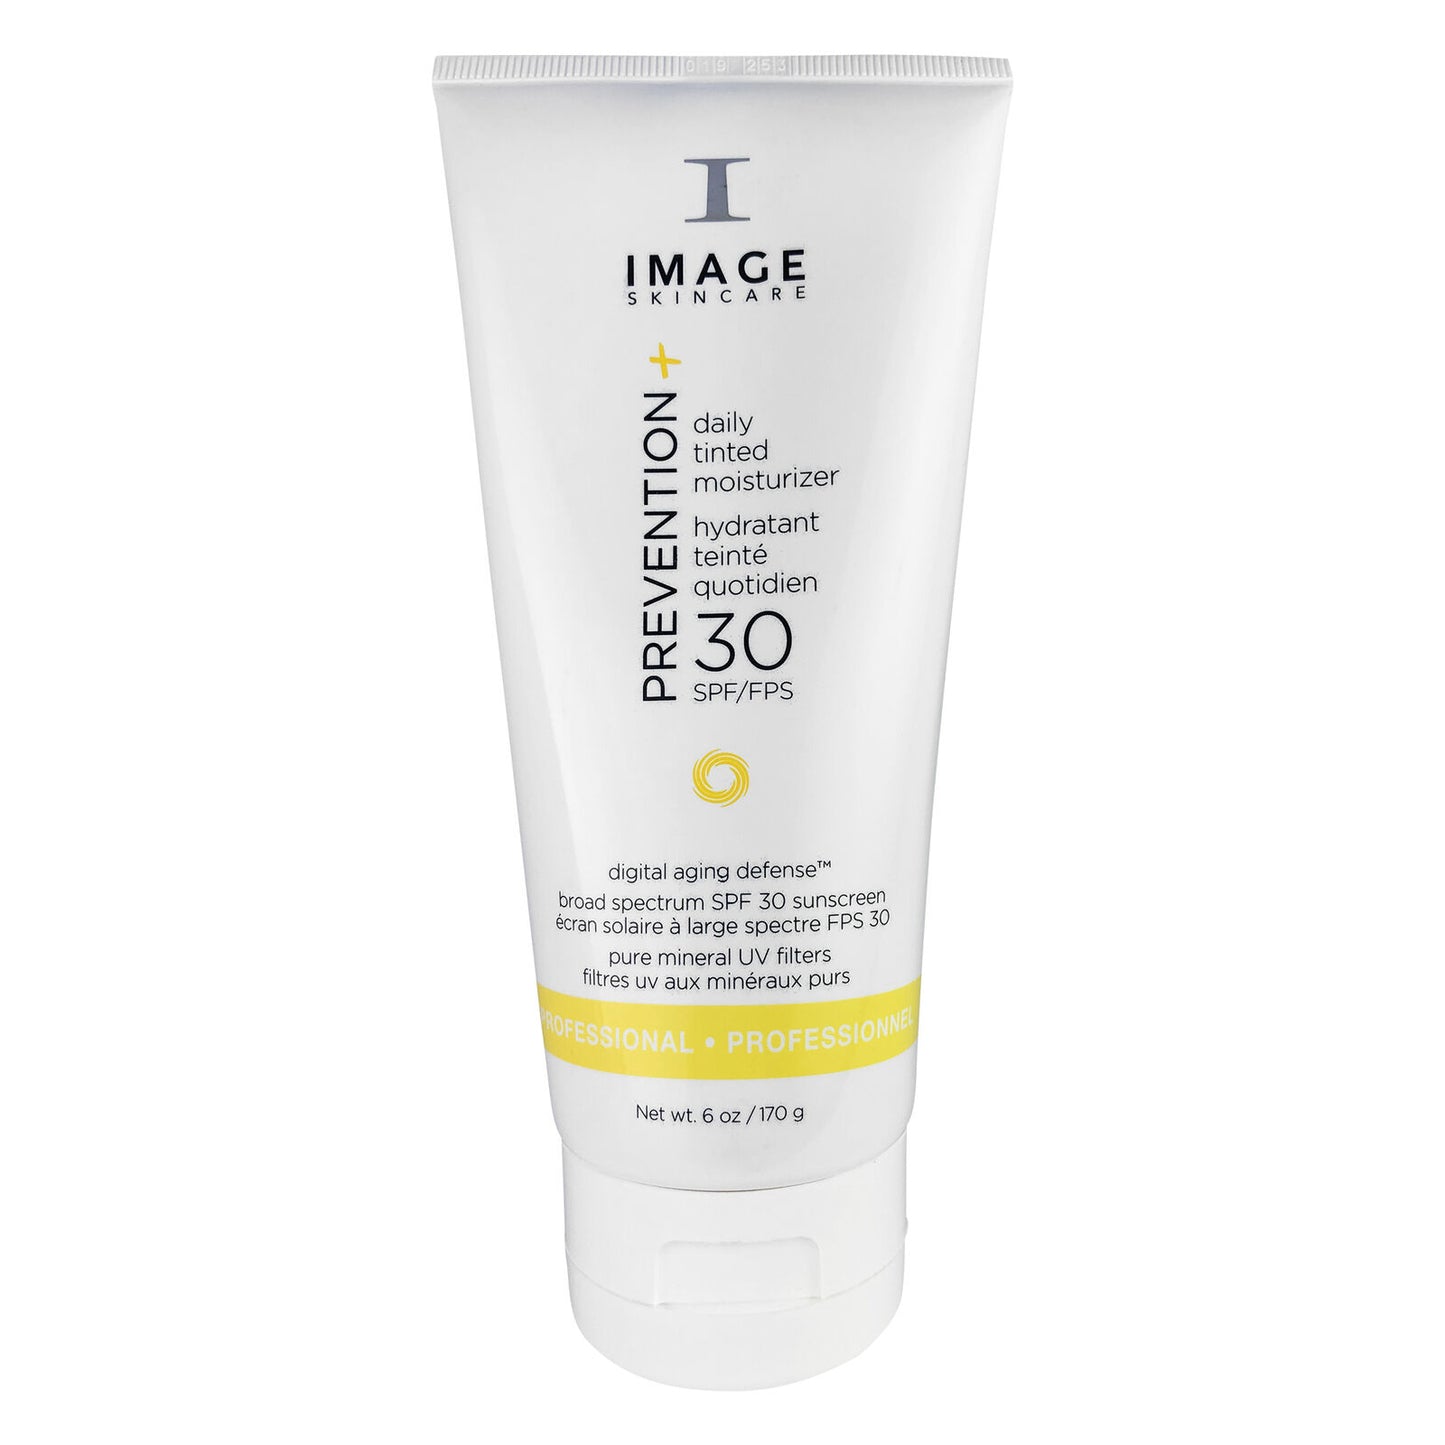 Image Skincare Prevention +  Daily Tinted Moisturizer SPF 30 - 170 g / 6 oz